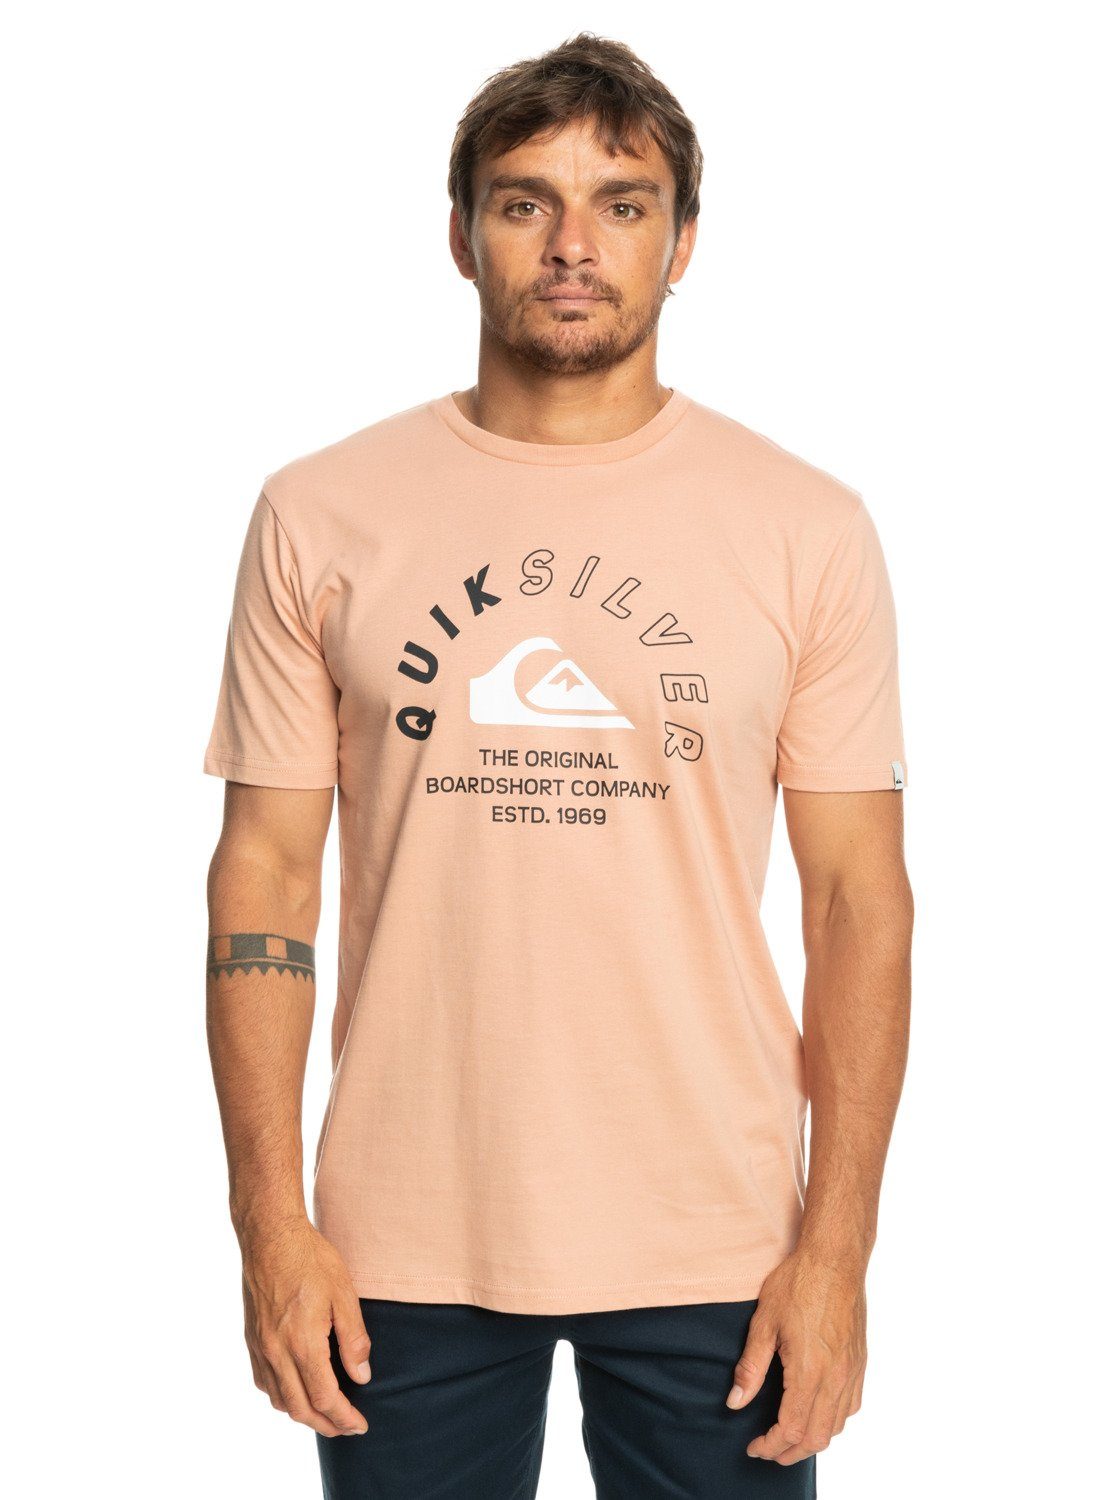 Quiksilver Signals Cafe Creme Mixed T-Shirt